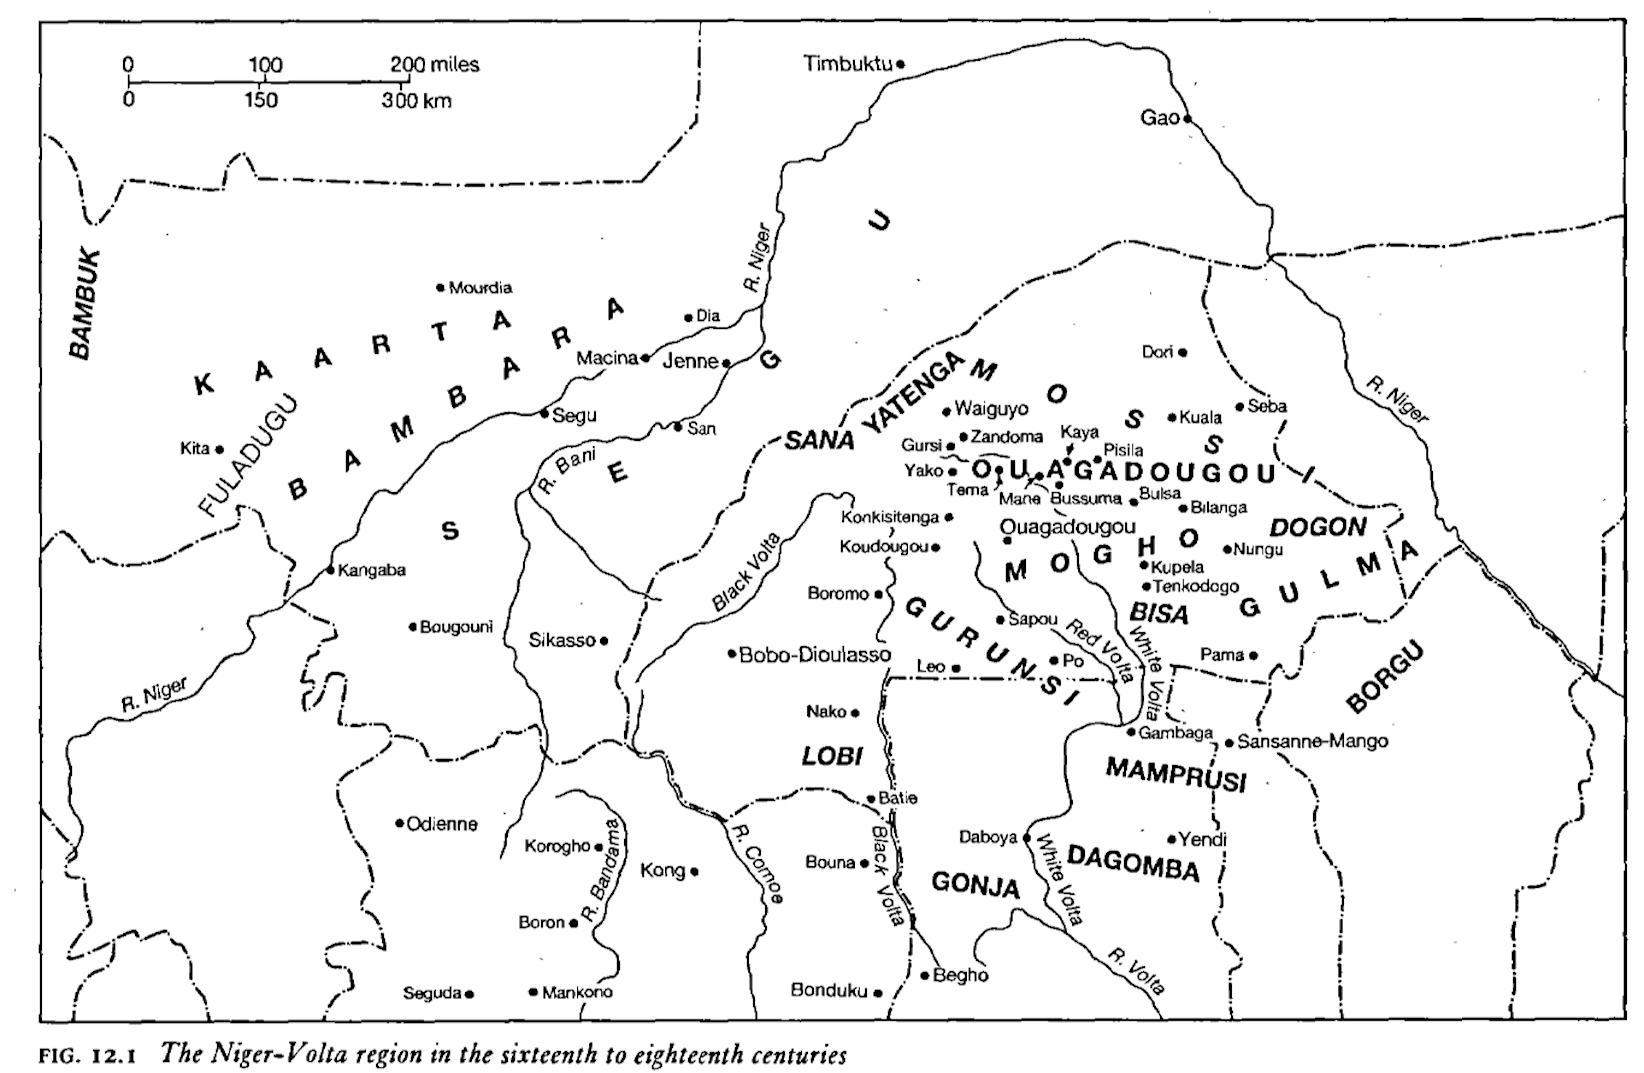 The Niger-Volta region in the sixteenth to eighteenth centuries.png